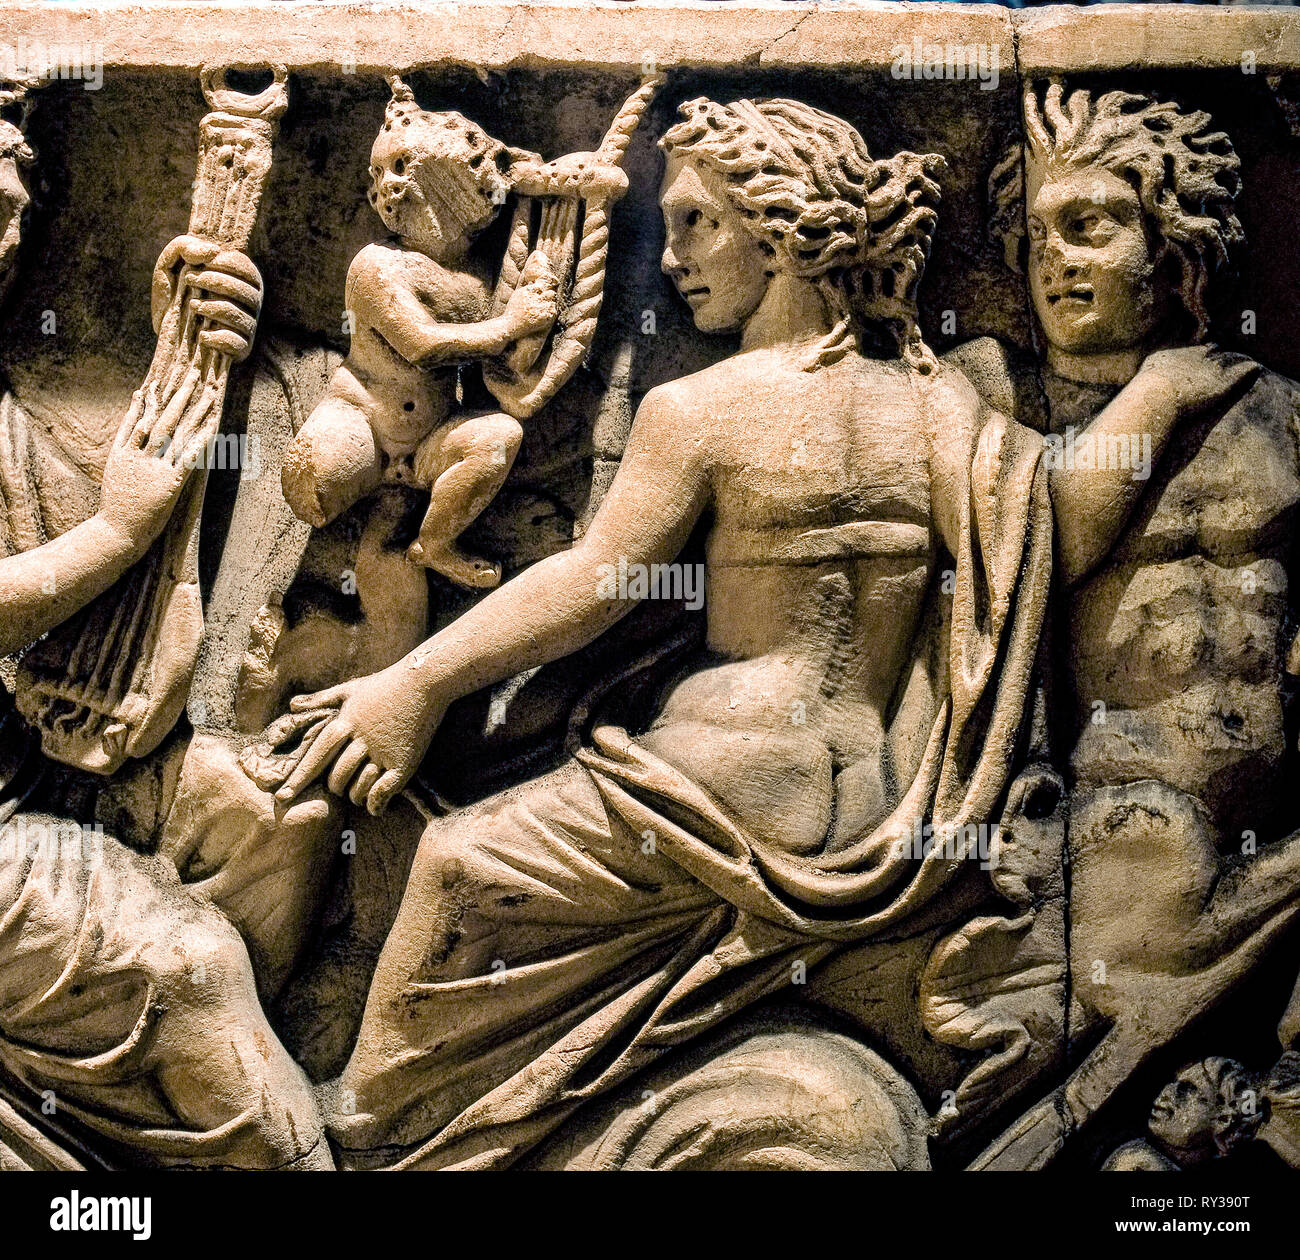 Italy, Lazio, Rome, Roman Archaeology, underground of s. Crisogono - detail of Sarcophagus Stock Photo